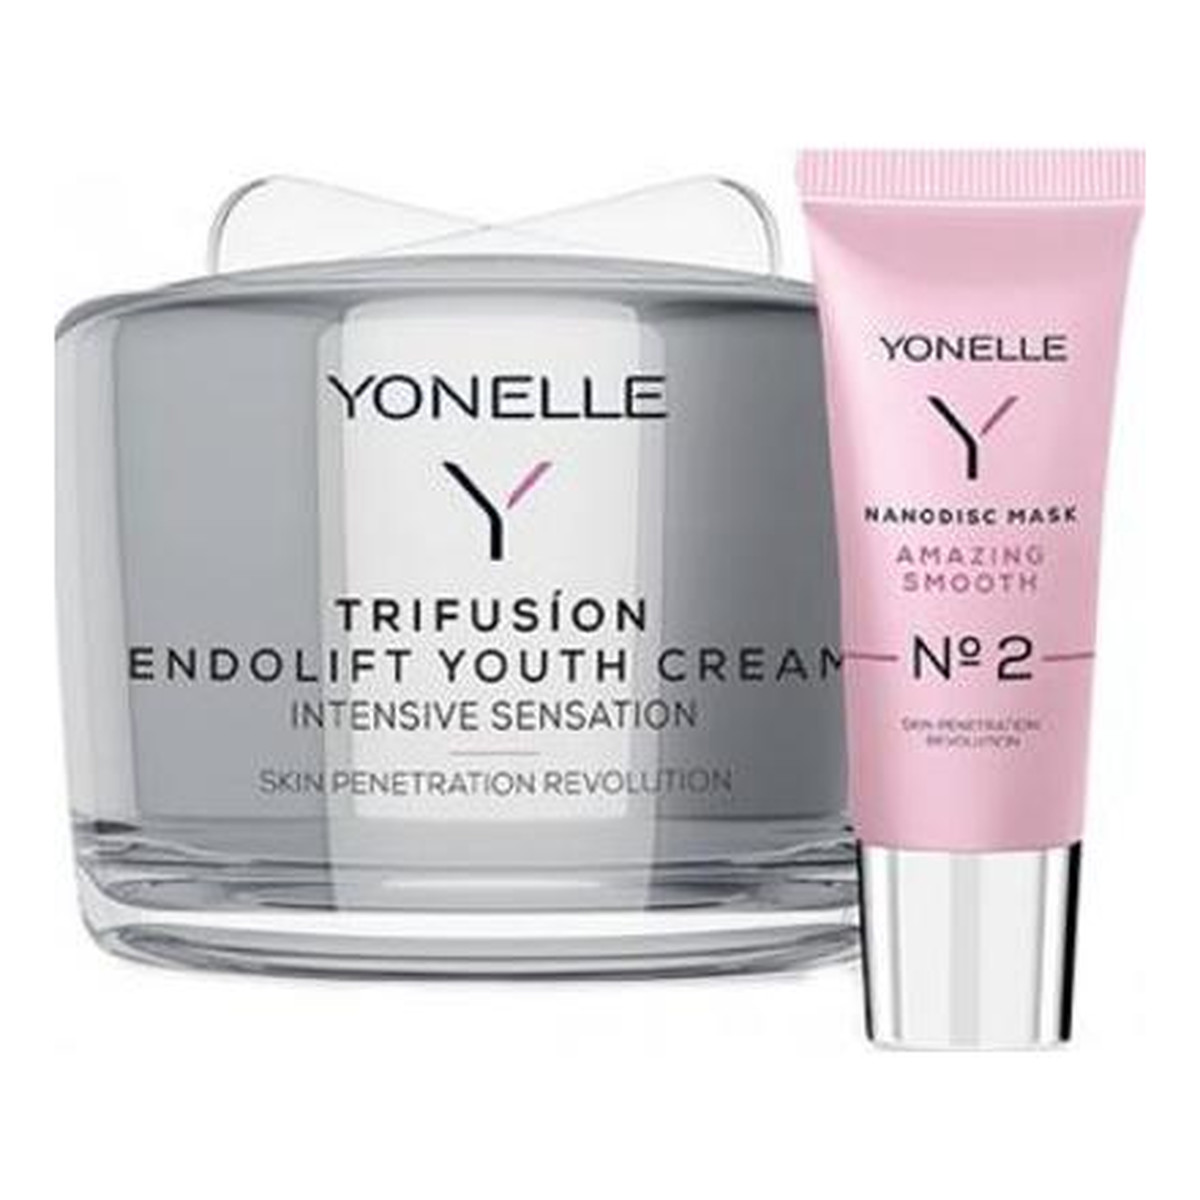 Yonelle Nanodiscs Technology Skin Penetration Revolution zestaw krem młodości 55ml + maska 20ml